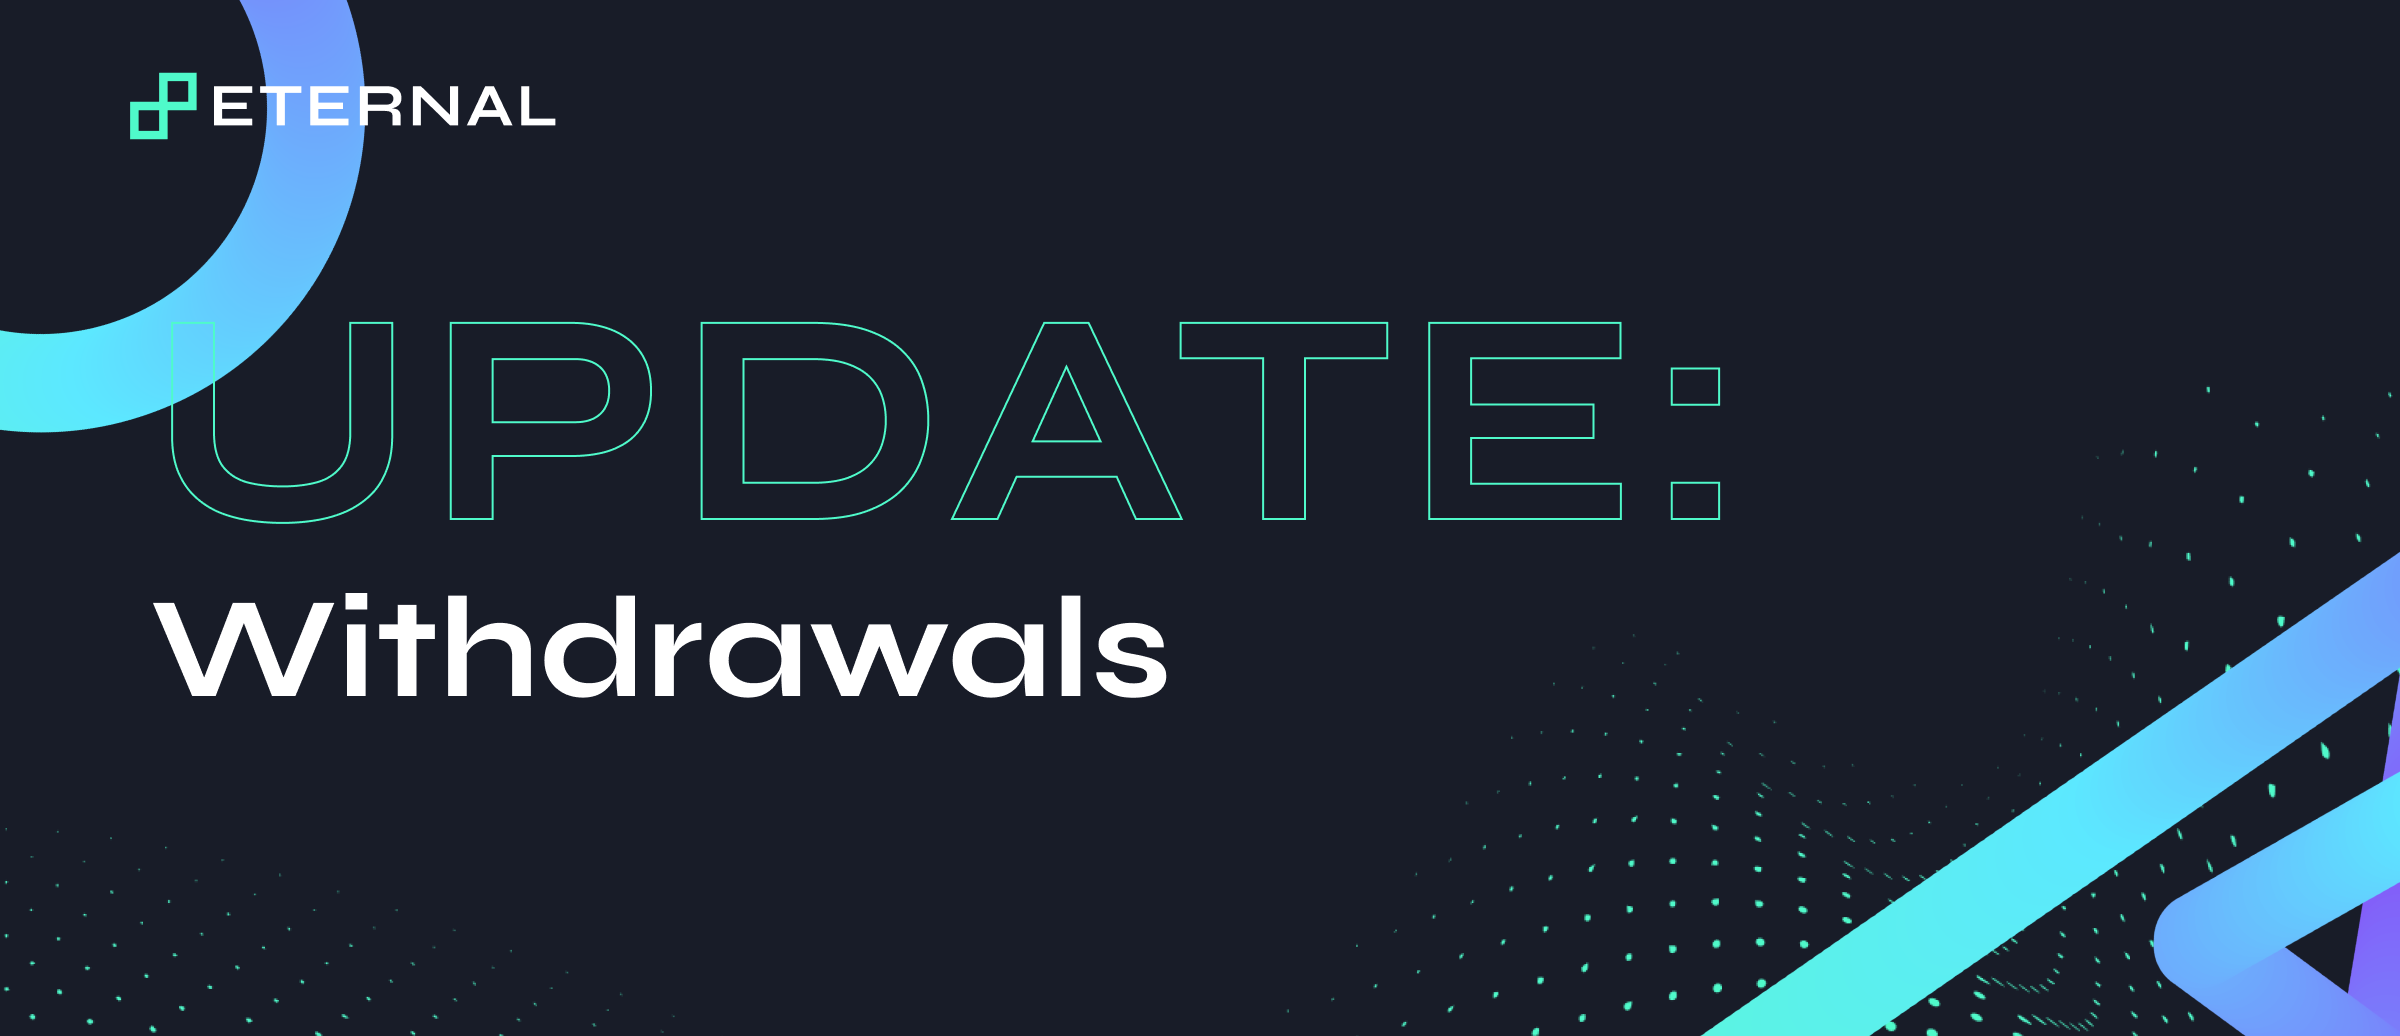 Withdrawals Update